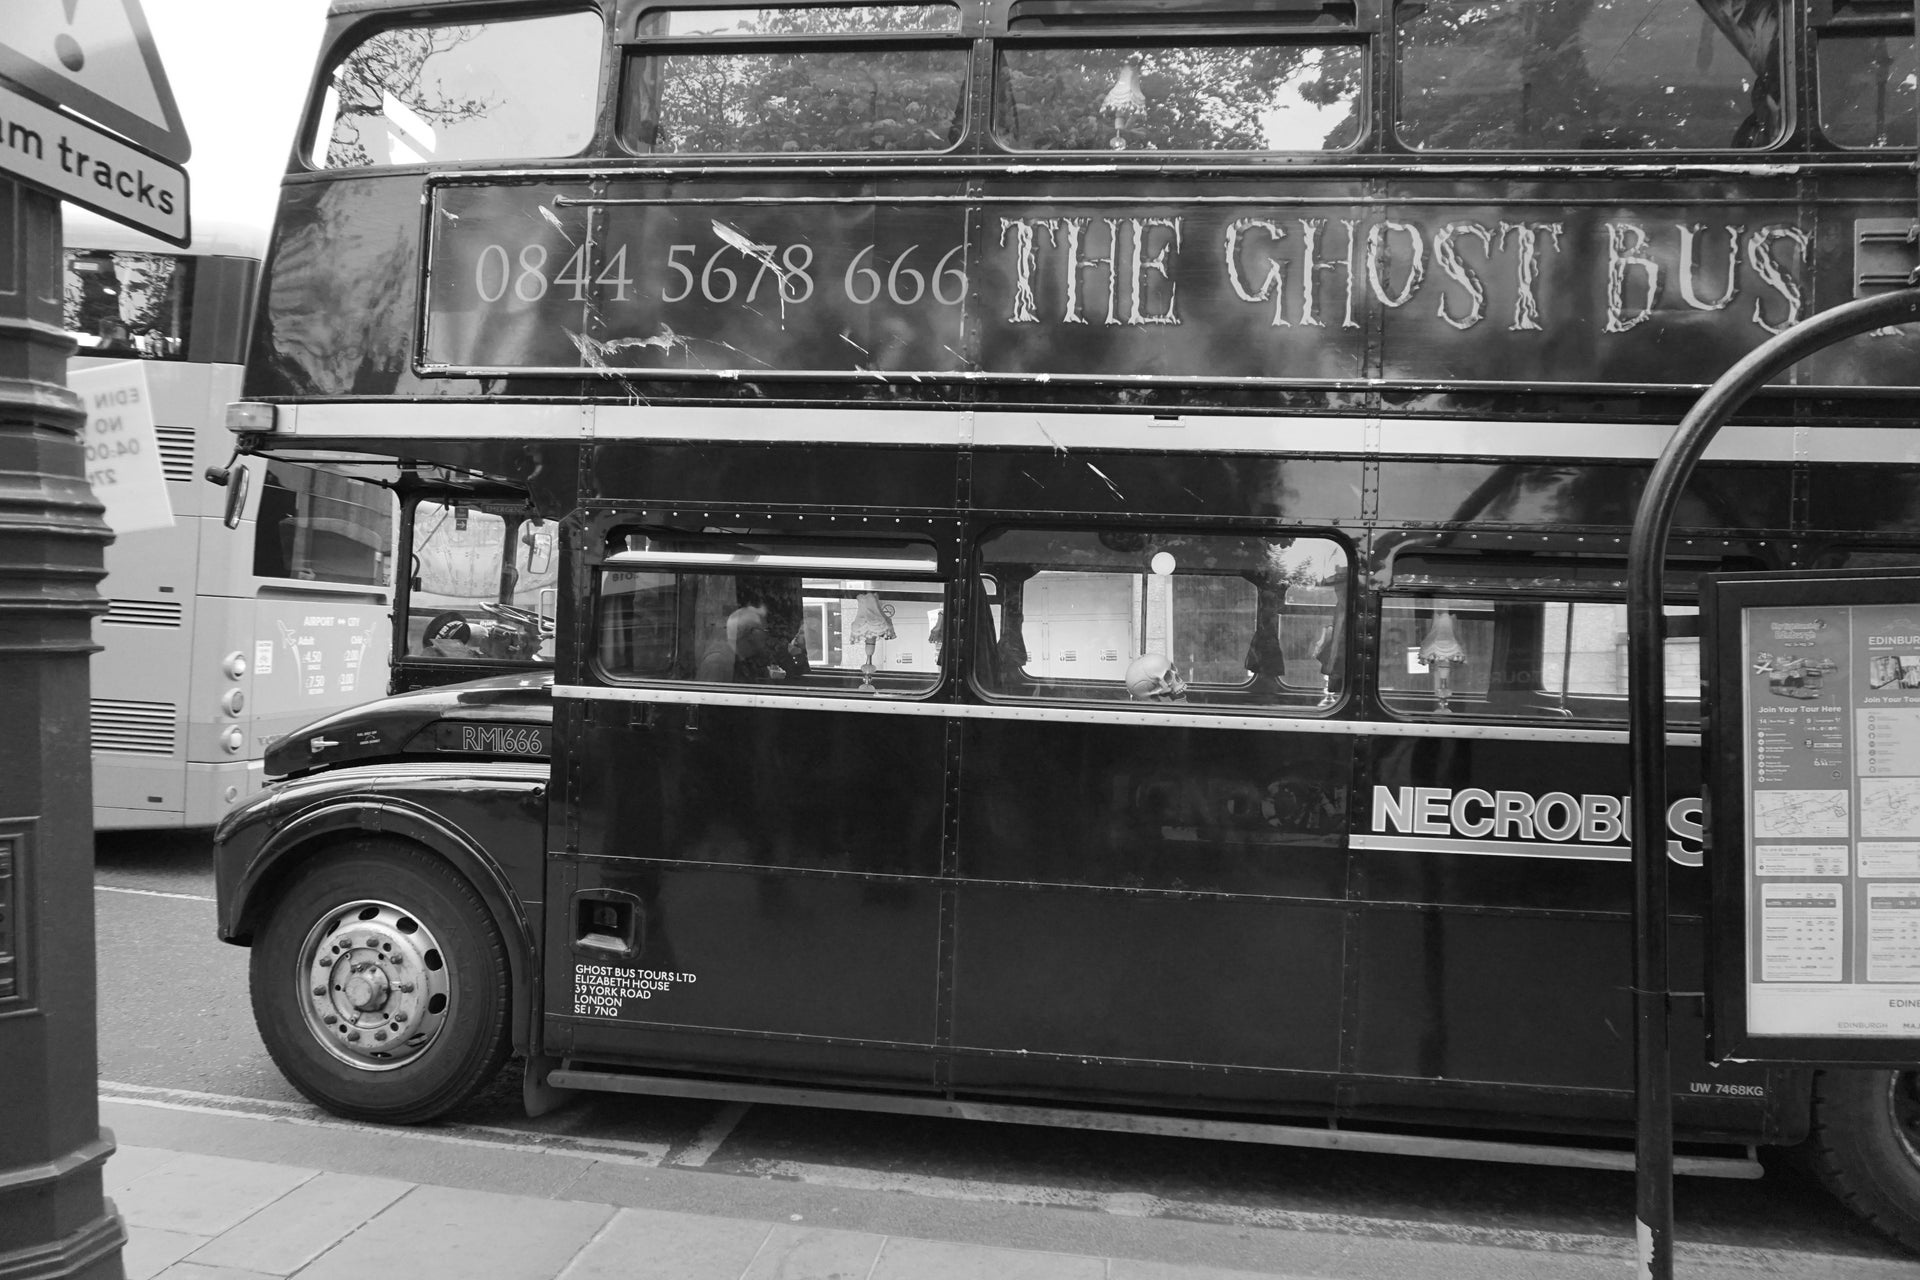 Edinburgh Ghost Bus Tour